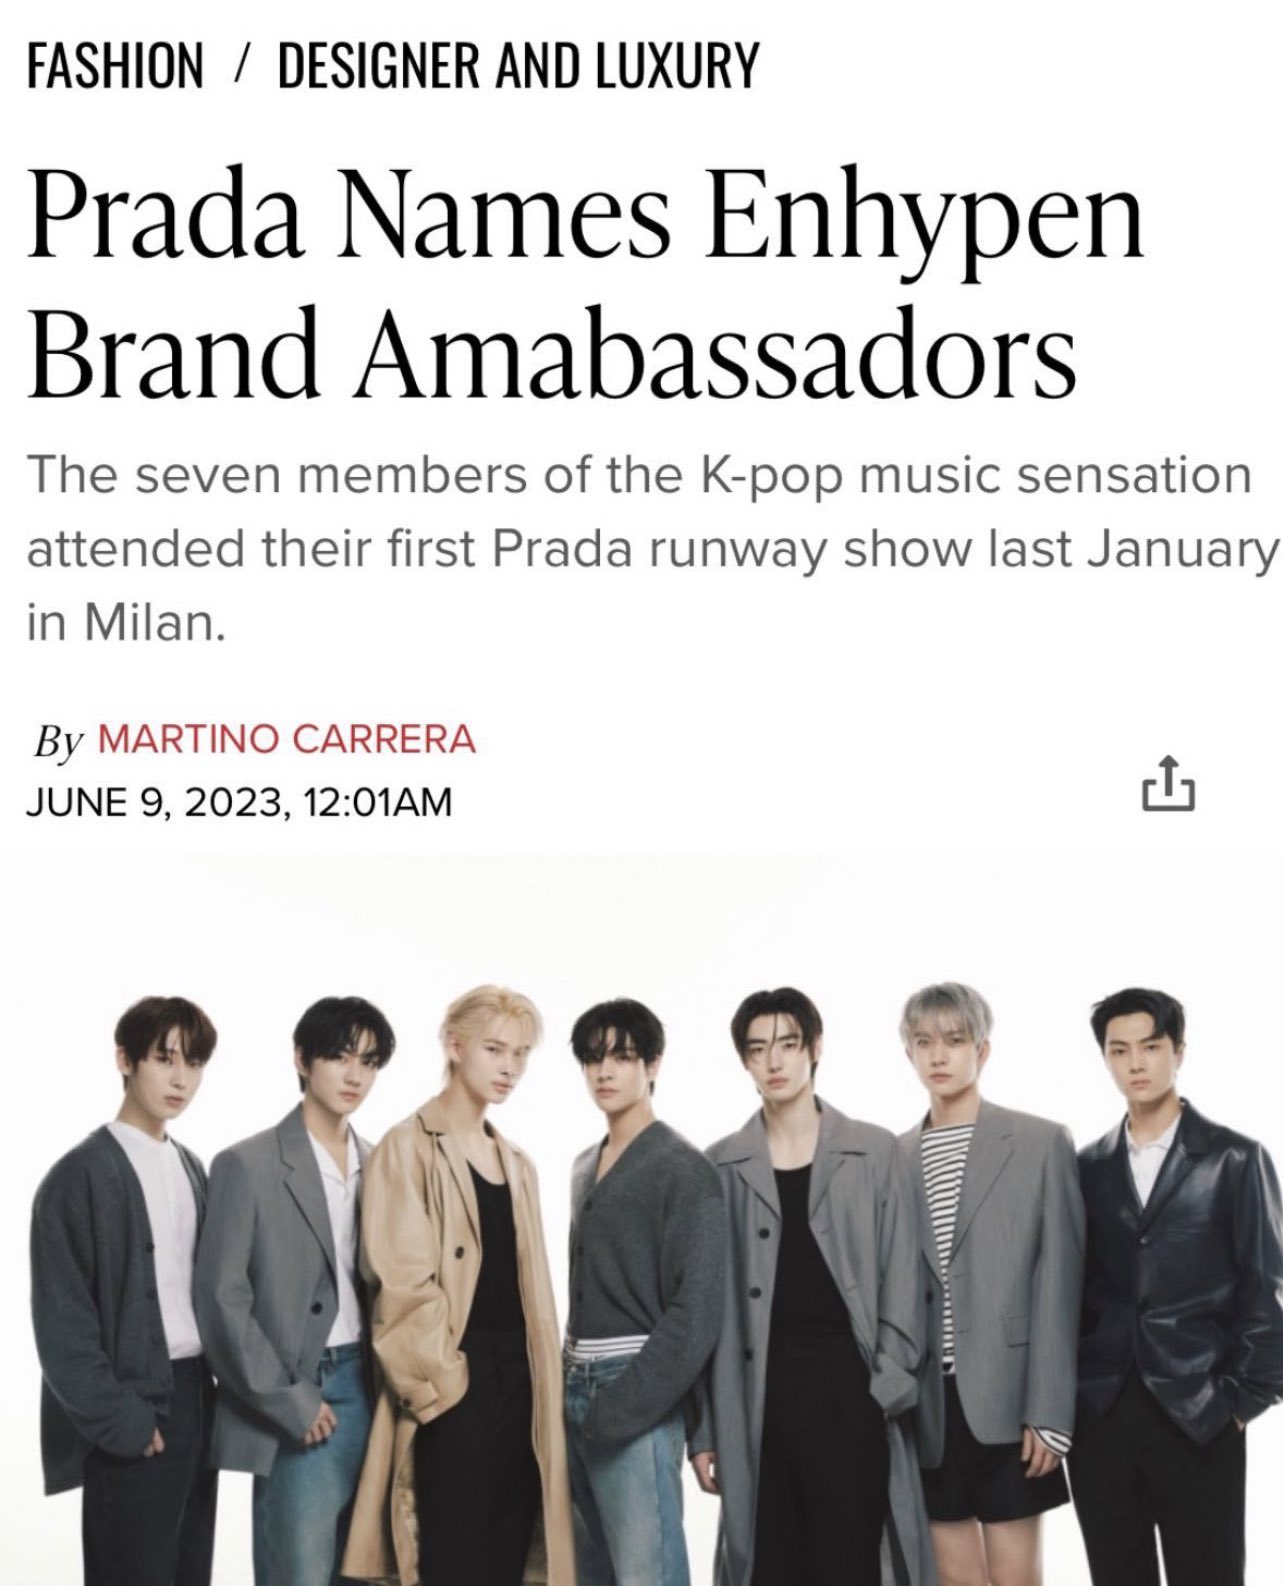 K-pop Band Enhypen Are the Latest Prada Brand Amabassadors